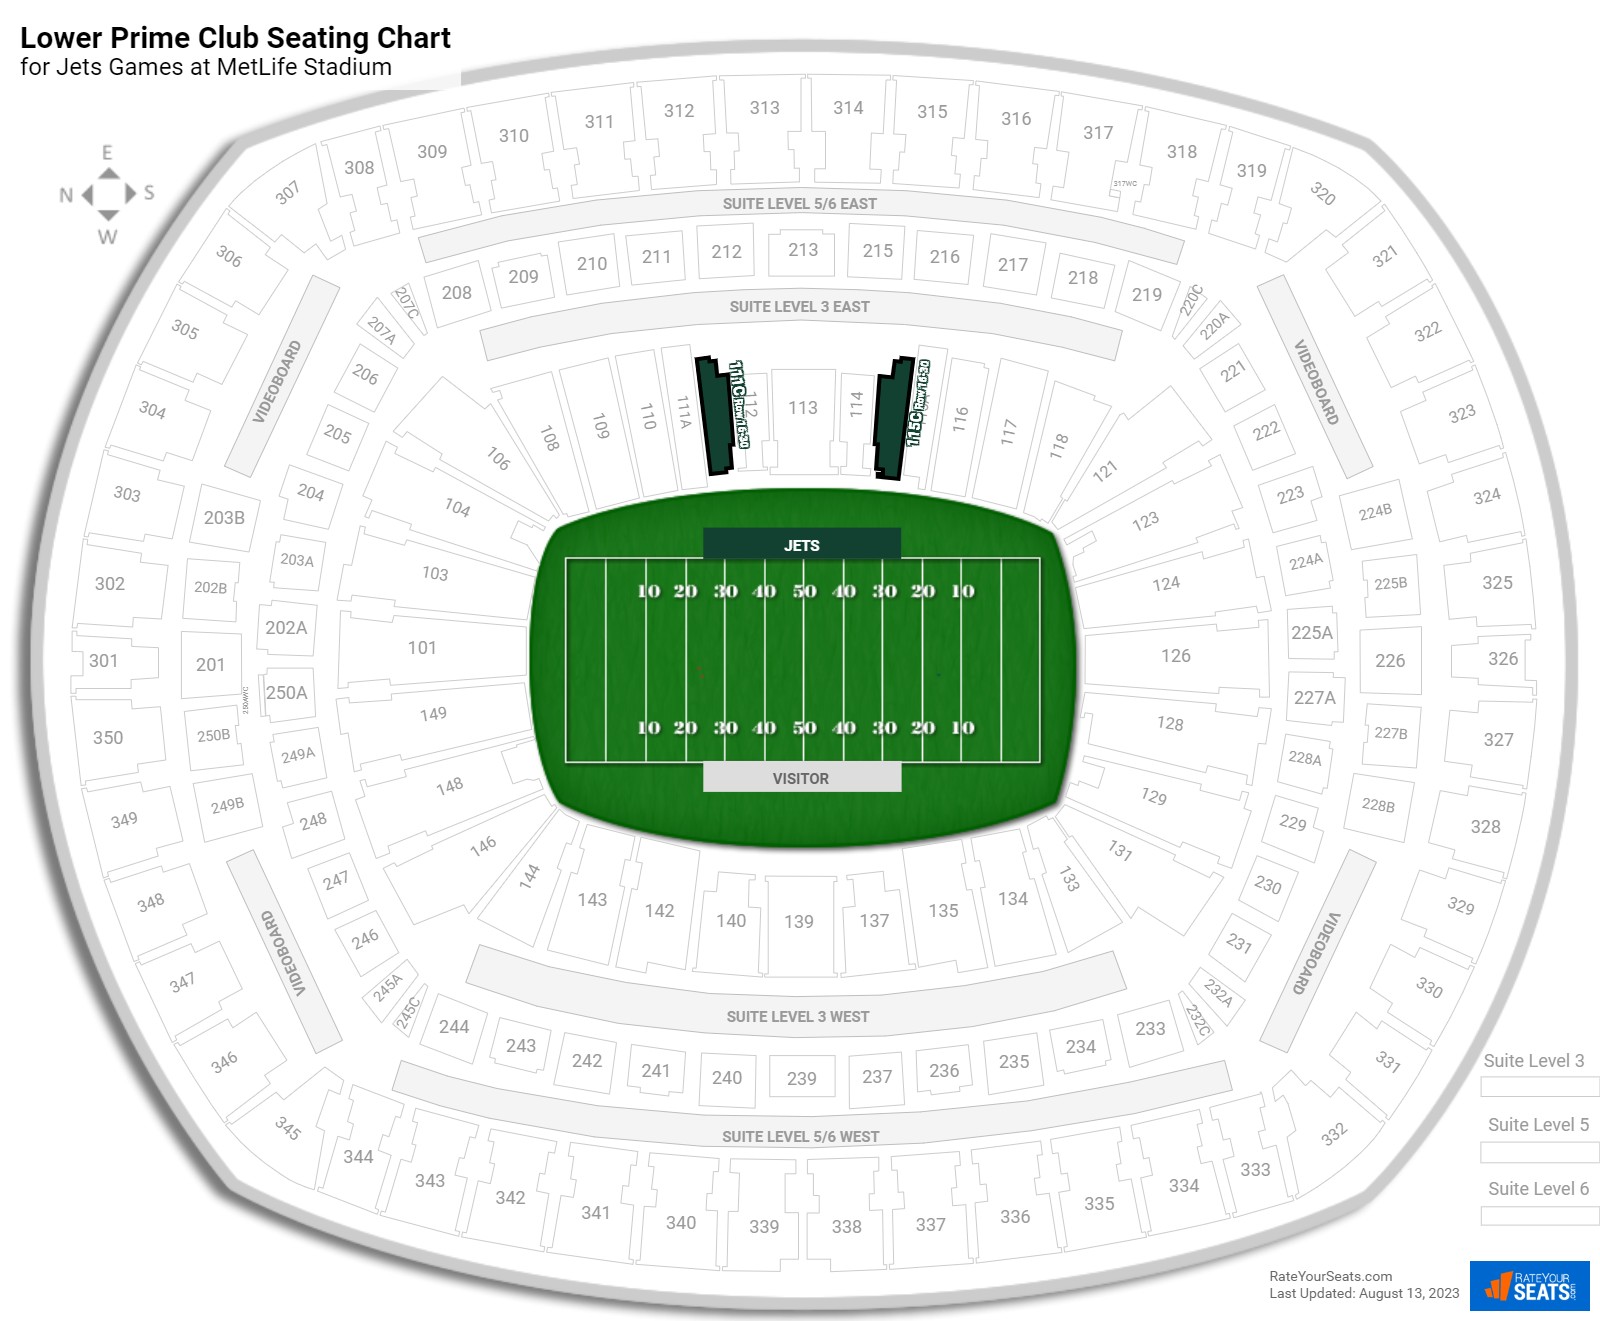 Jets Lower Prime Club Seating Chart at MetLife Stadium